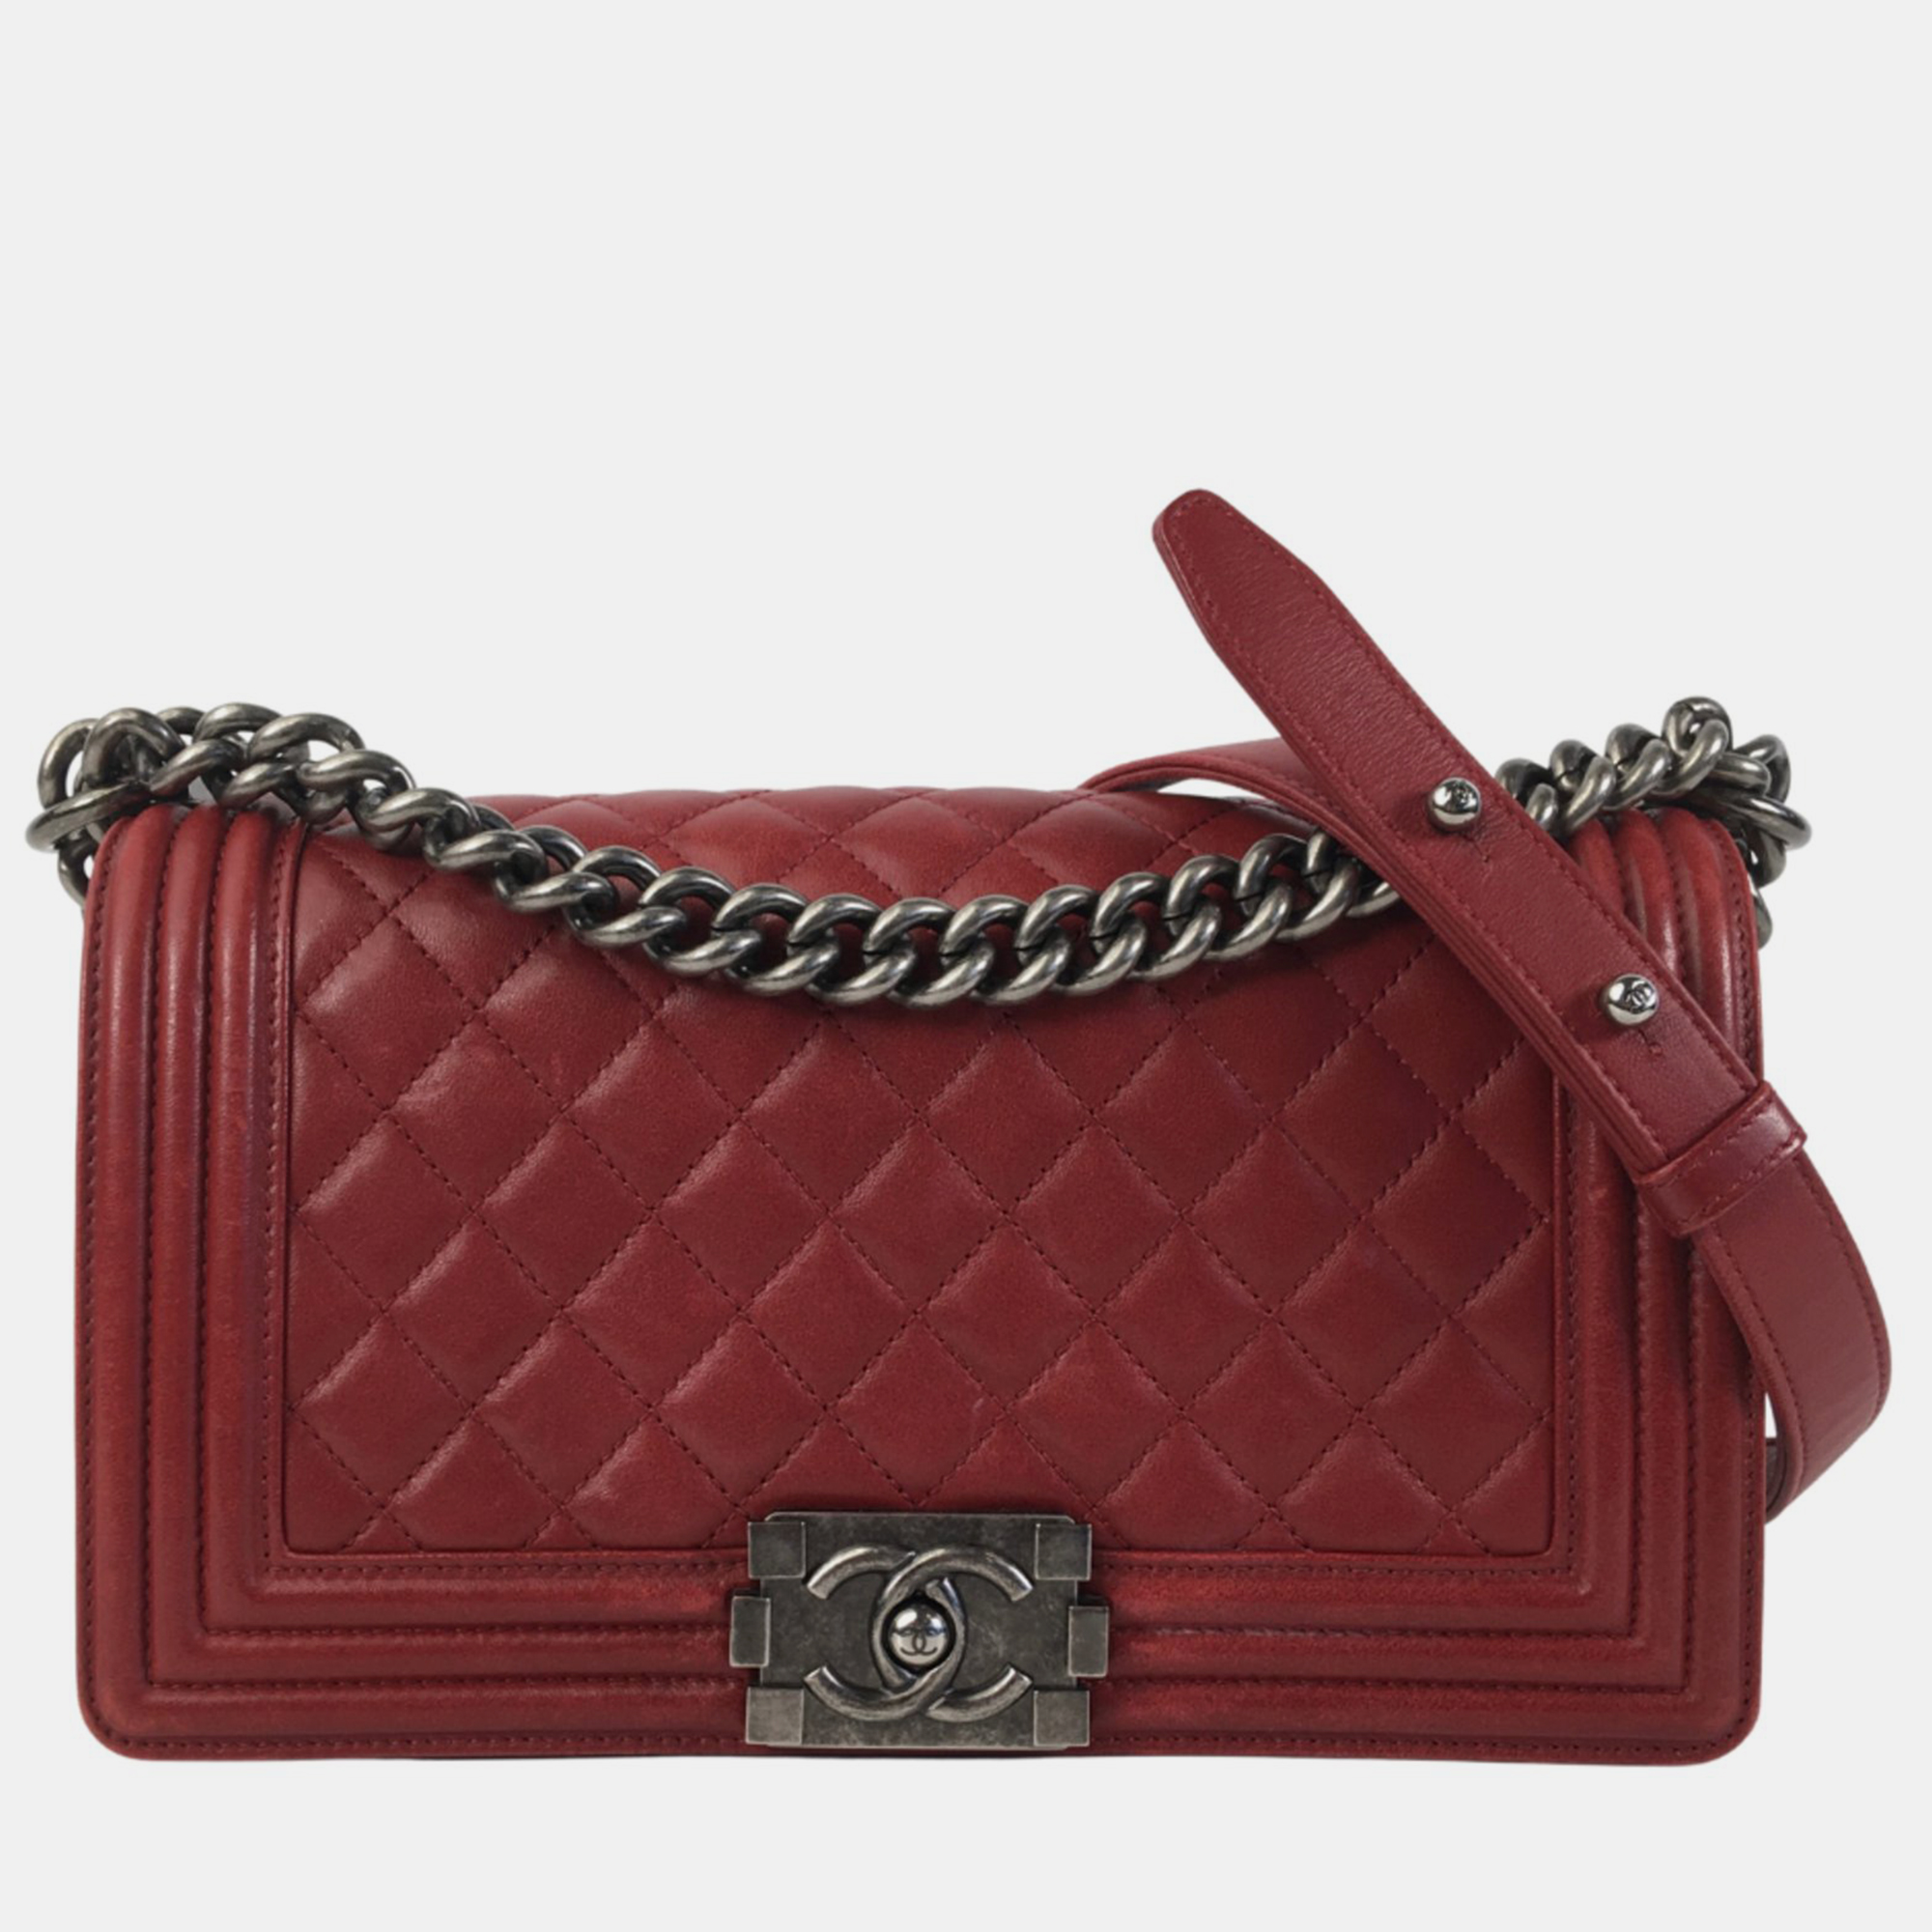 Chanel red lambskin leather medium boy bag